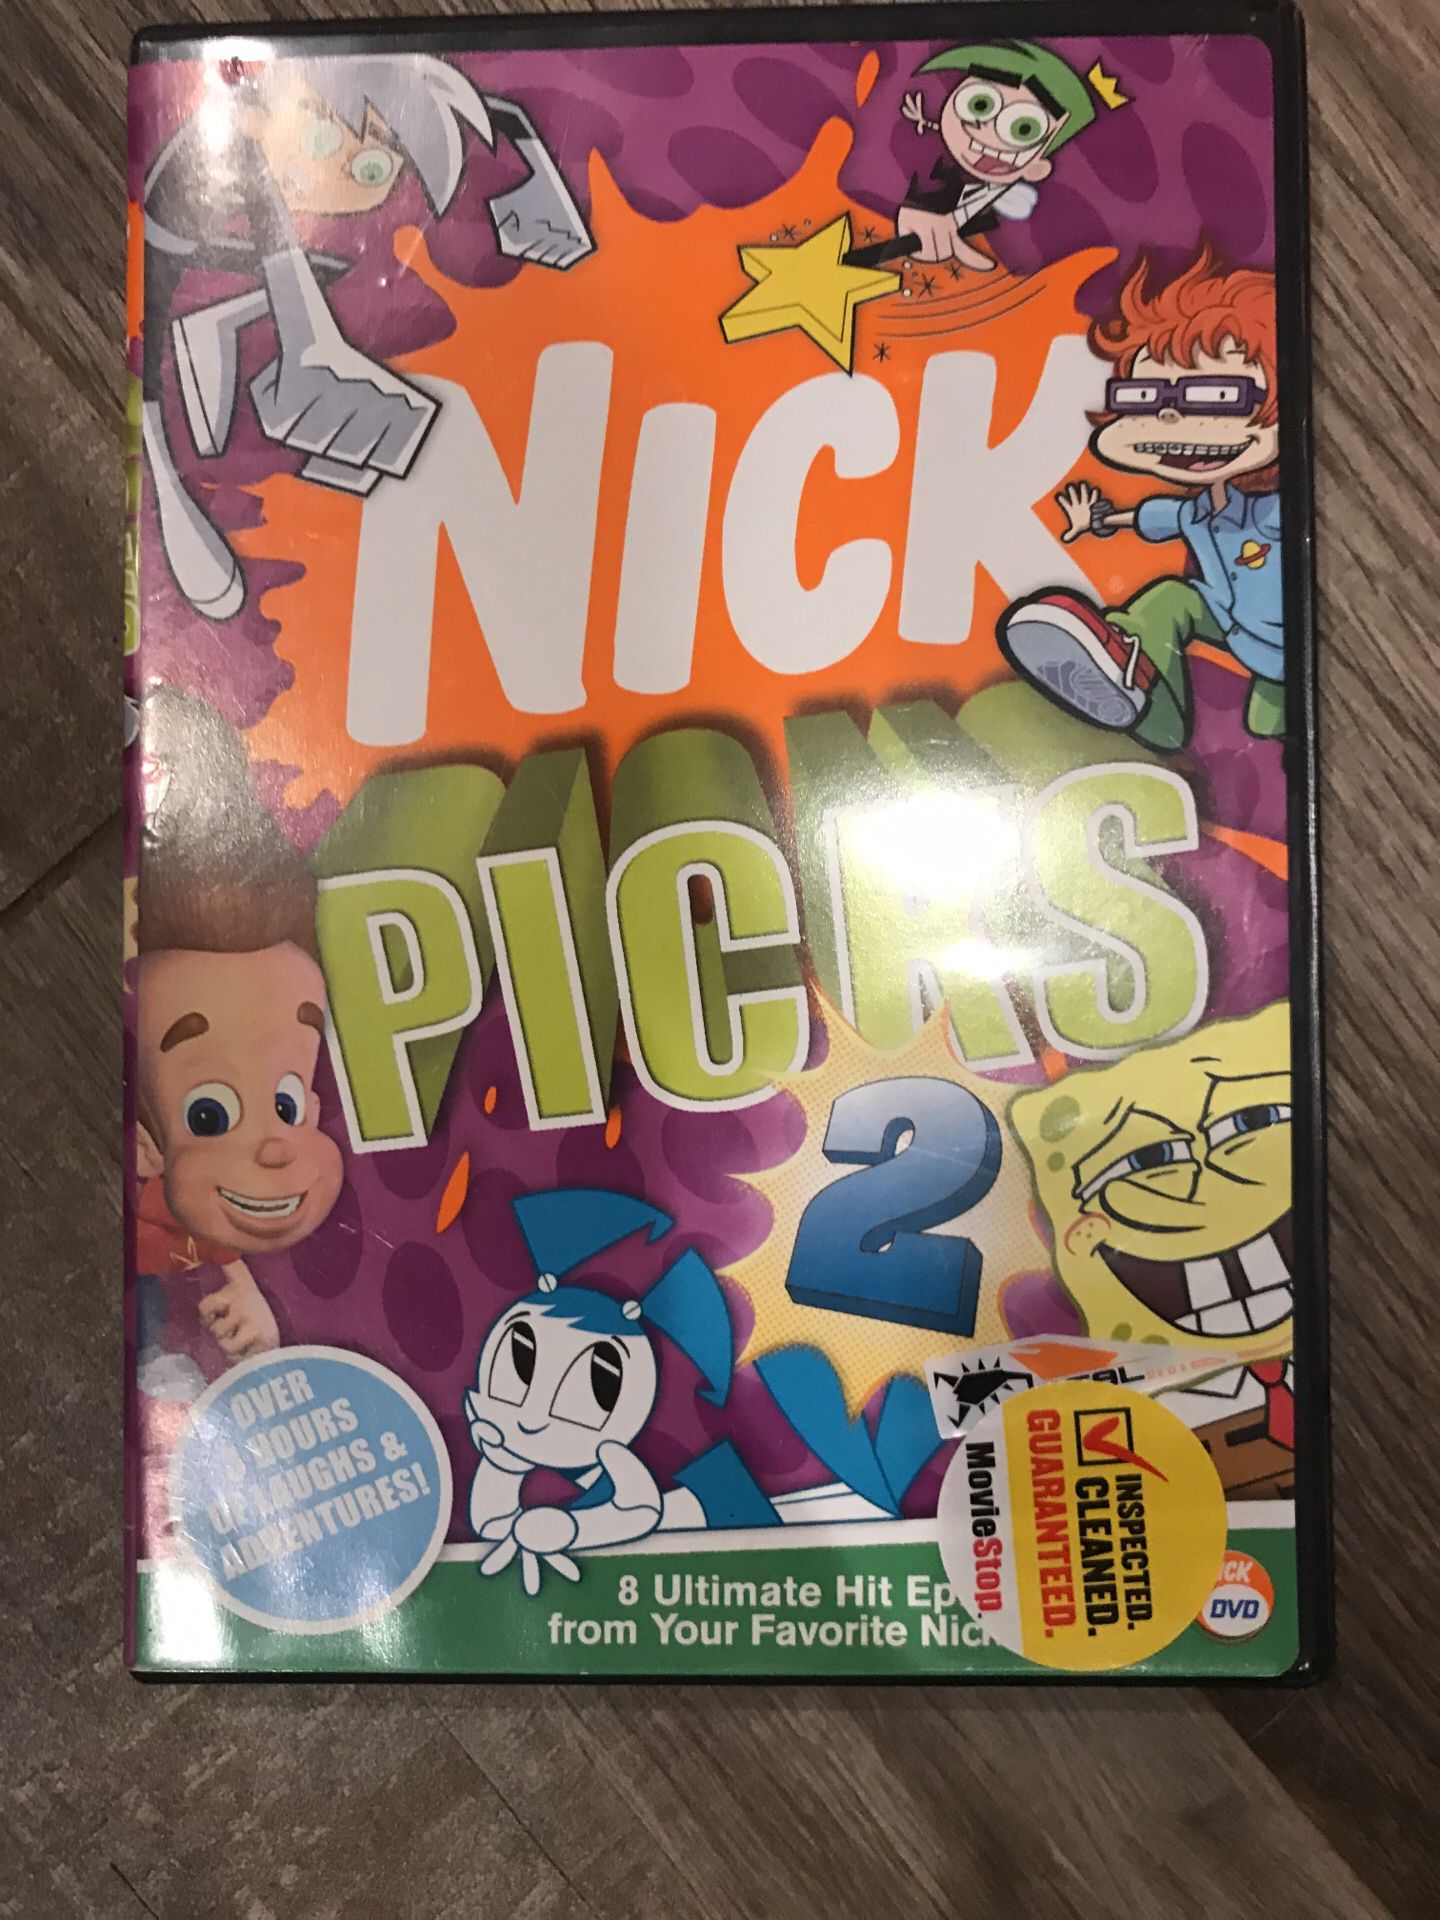 Nick pics to DVD fairly odd parents, all grown up, SpongeBob, rug rats, Danny phantom, jimmy neutron, teenage robot